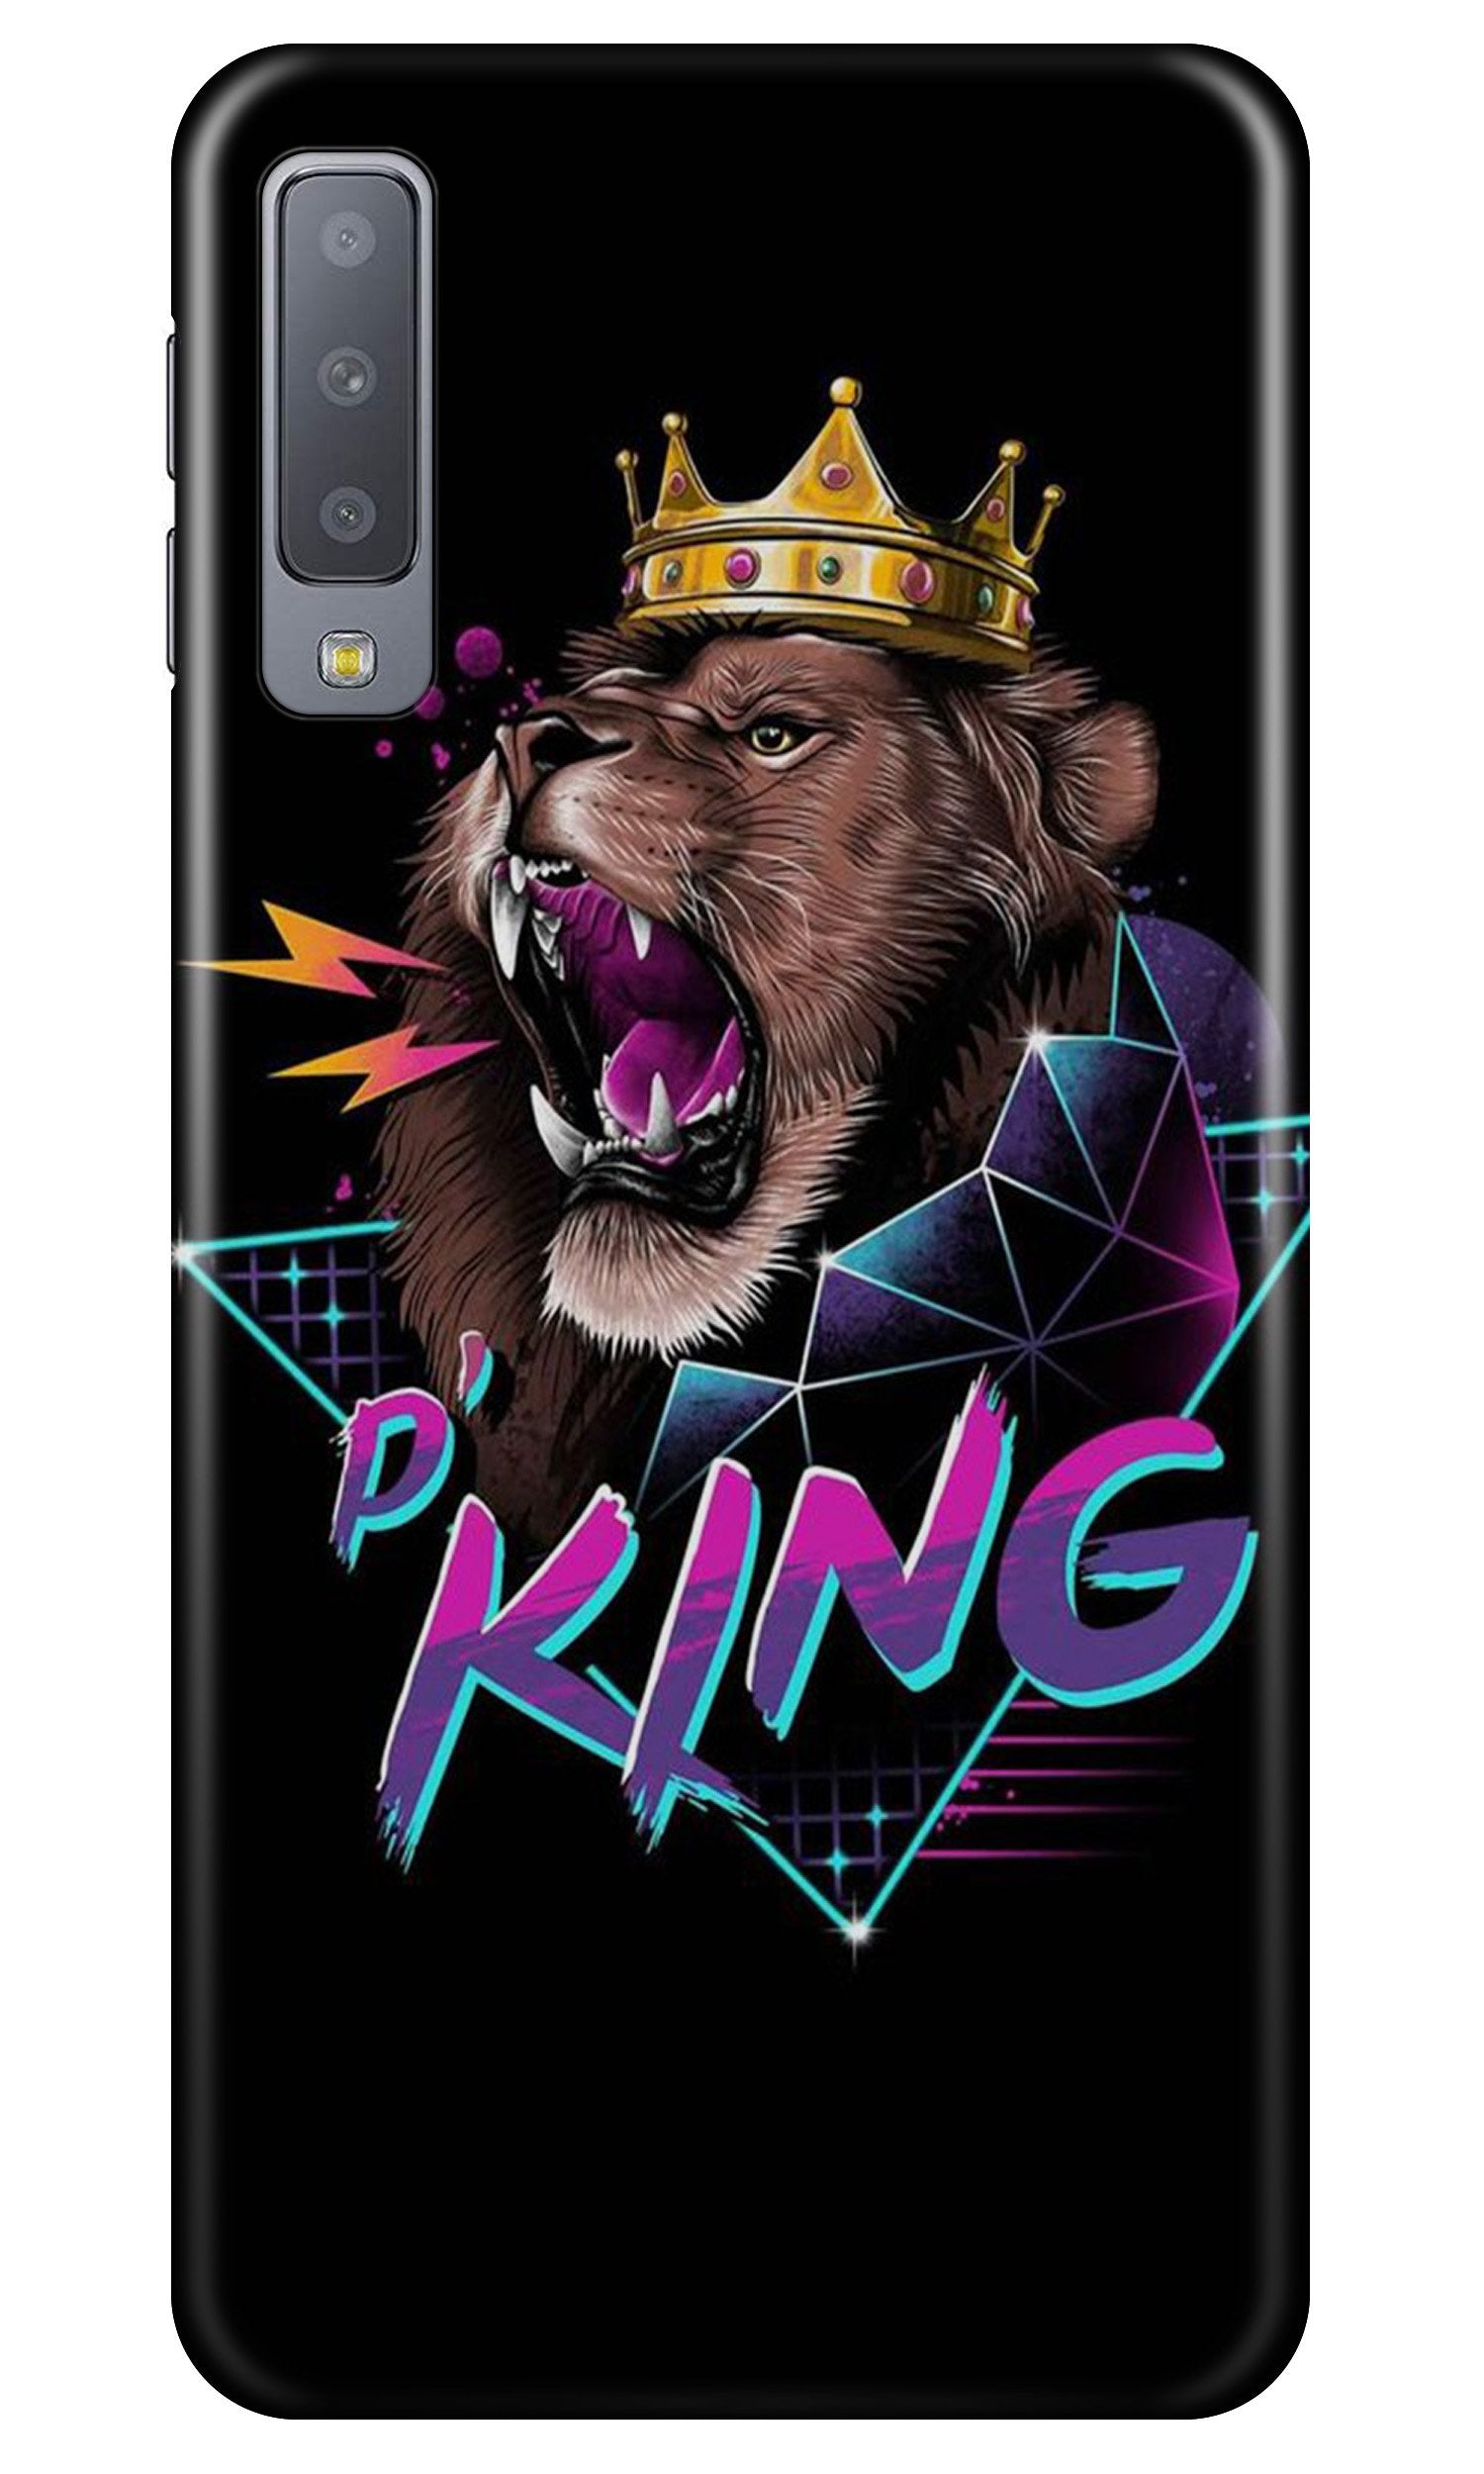 Lion King Case for Samung Galaxy A70s (Design No. 219)